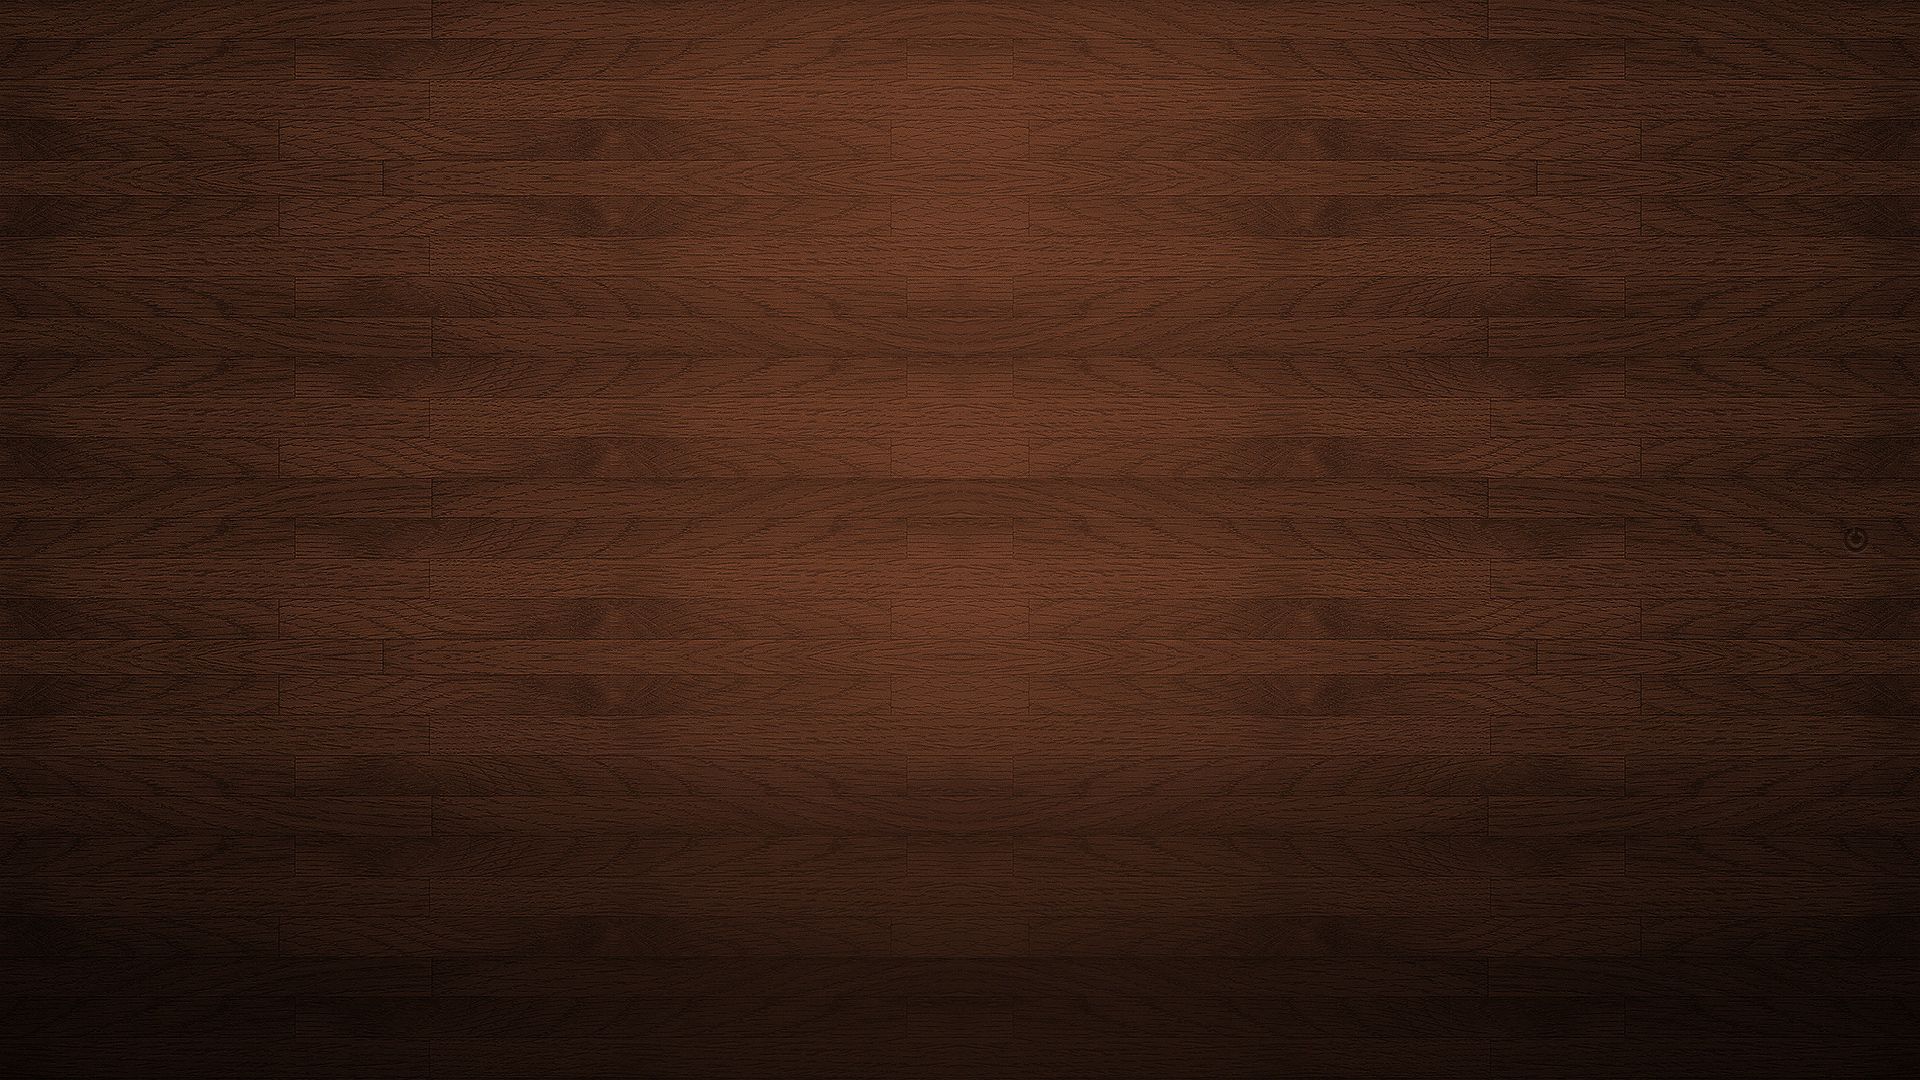 wood, shadow, board, wooden, texture, dark, textures, surface phone background